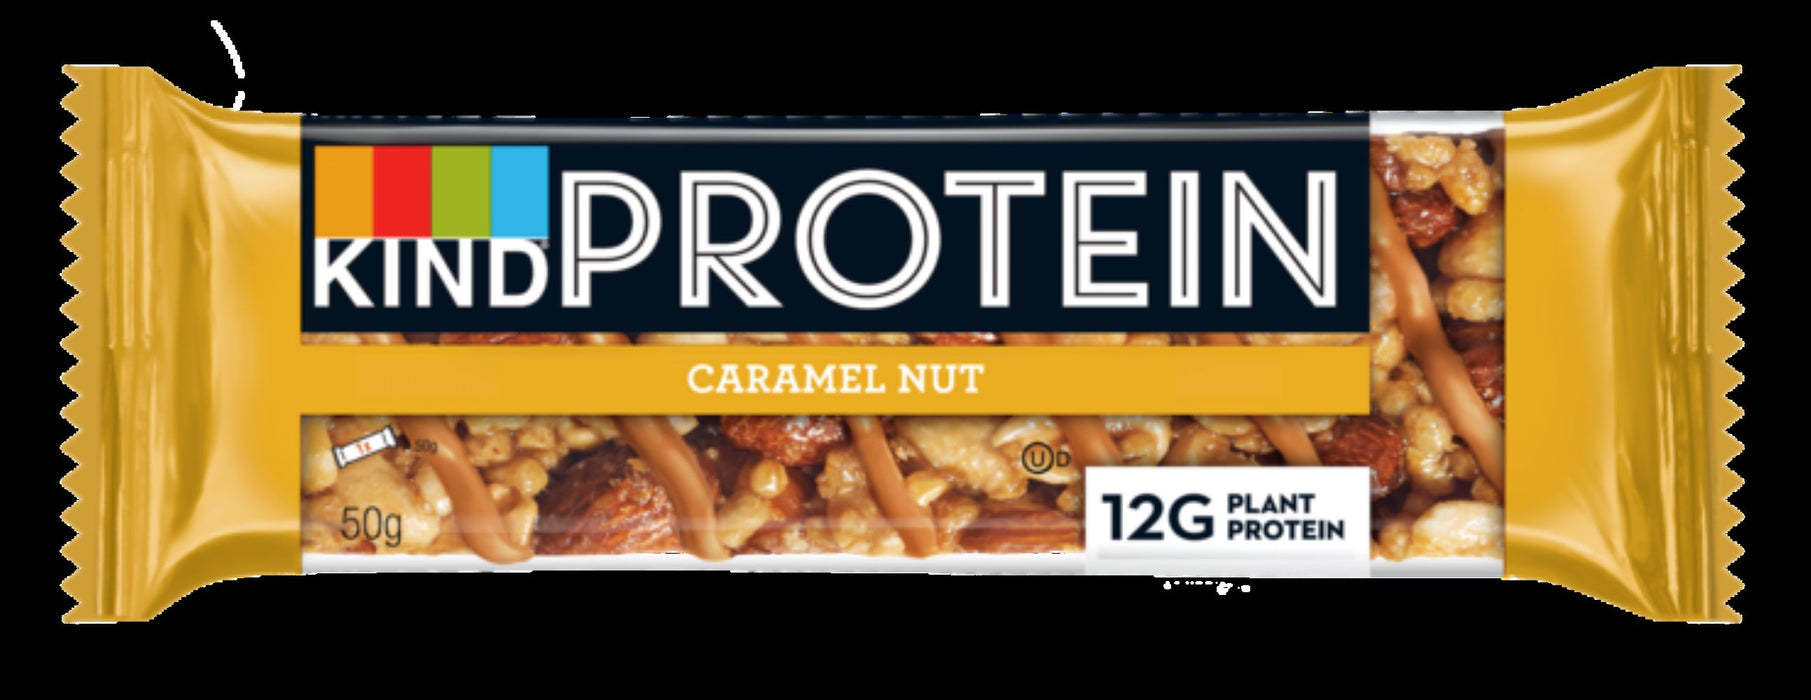 Kind Protein Caramel Nut 50g